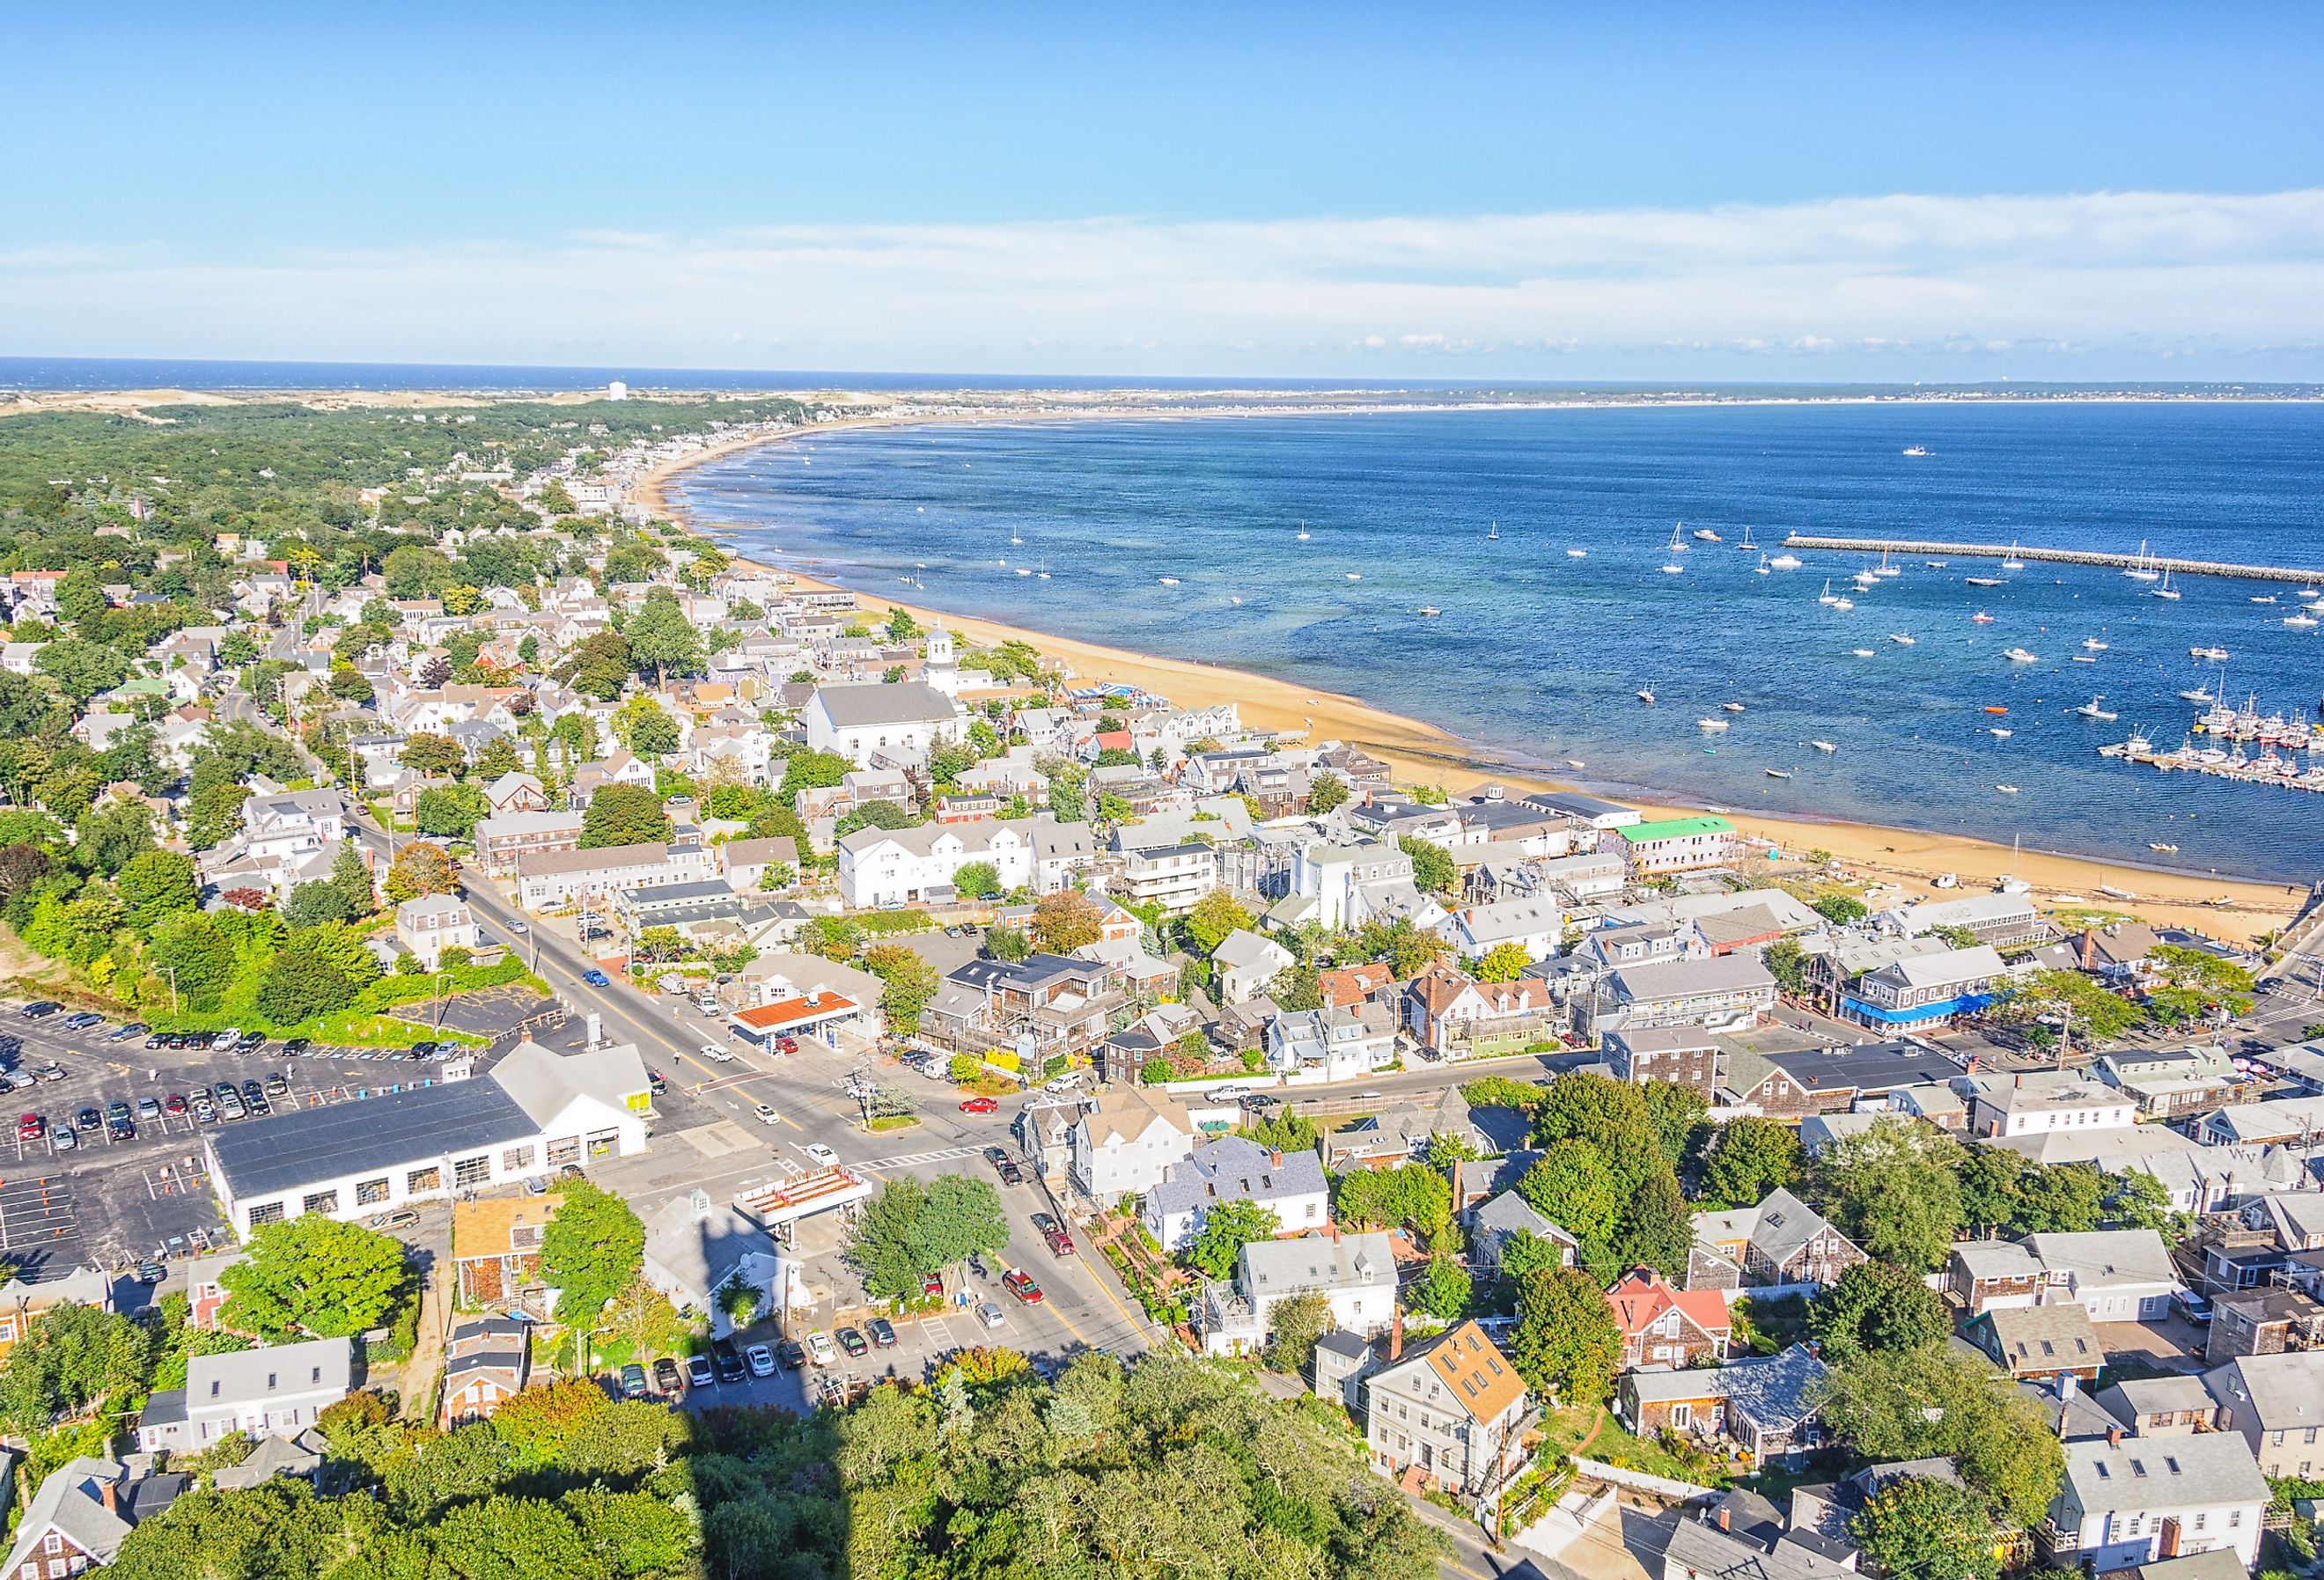 Rhode Island. Image credit solepsizm via Shutterstock